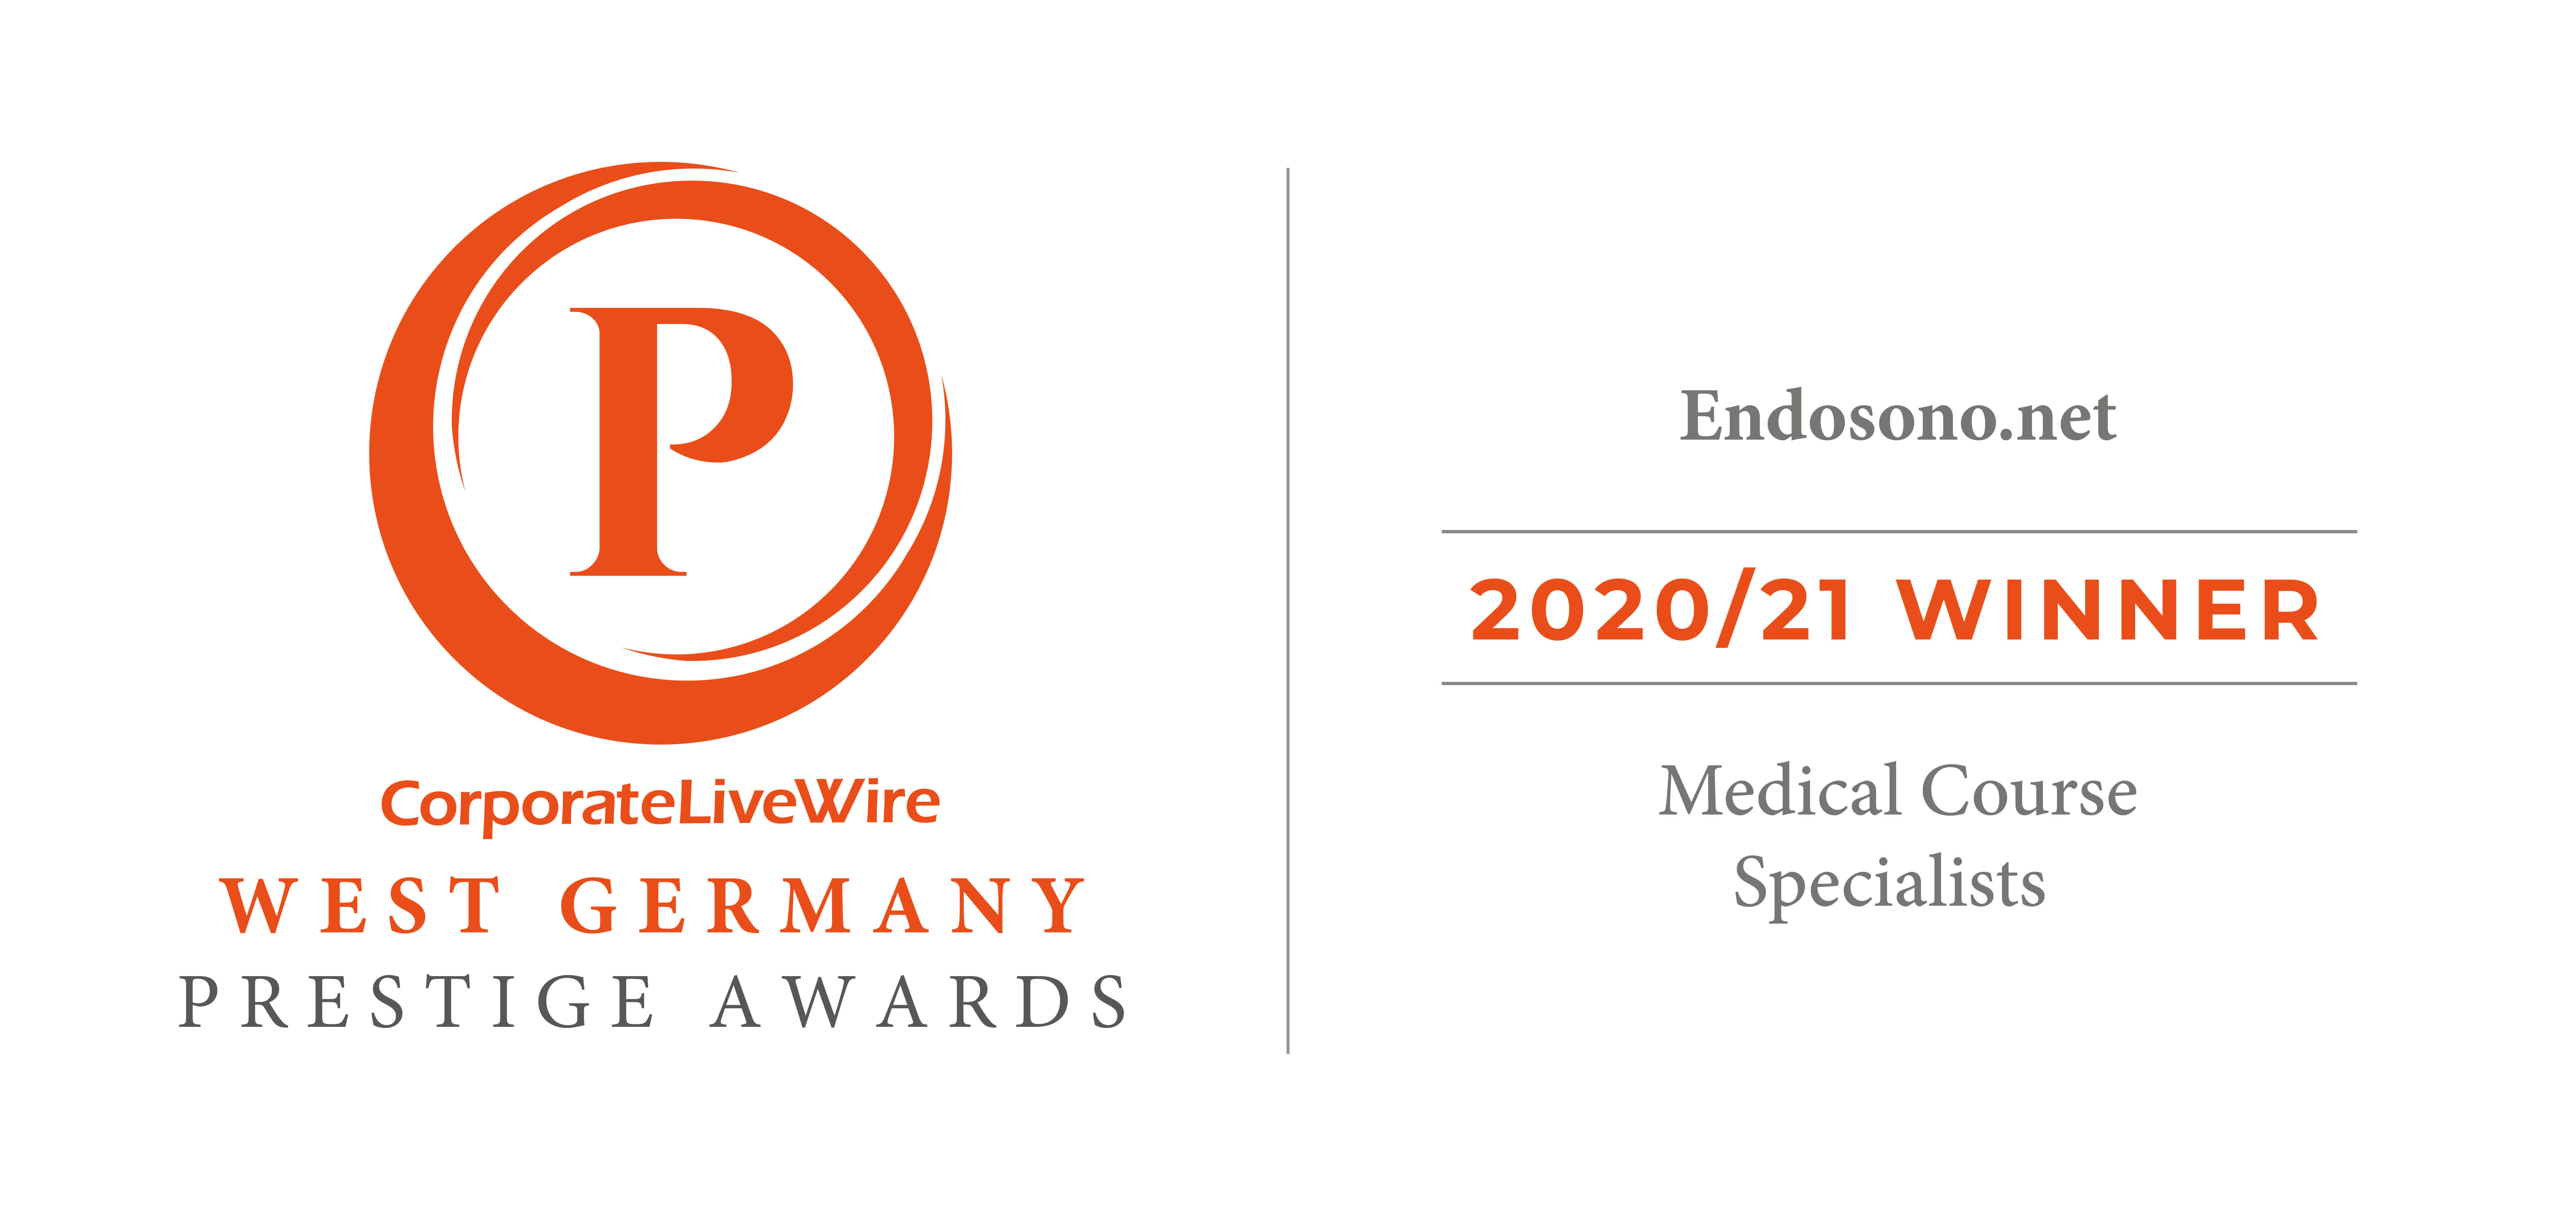 Winner West Germany Prestige Awards - Corporate LiveWire - Medical Course Specialist 2020/21